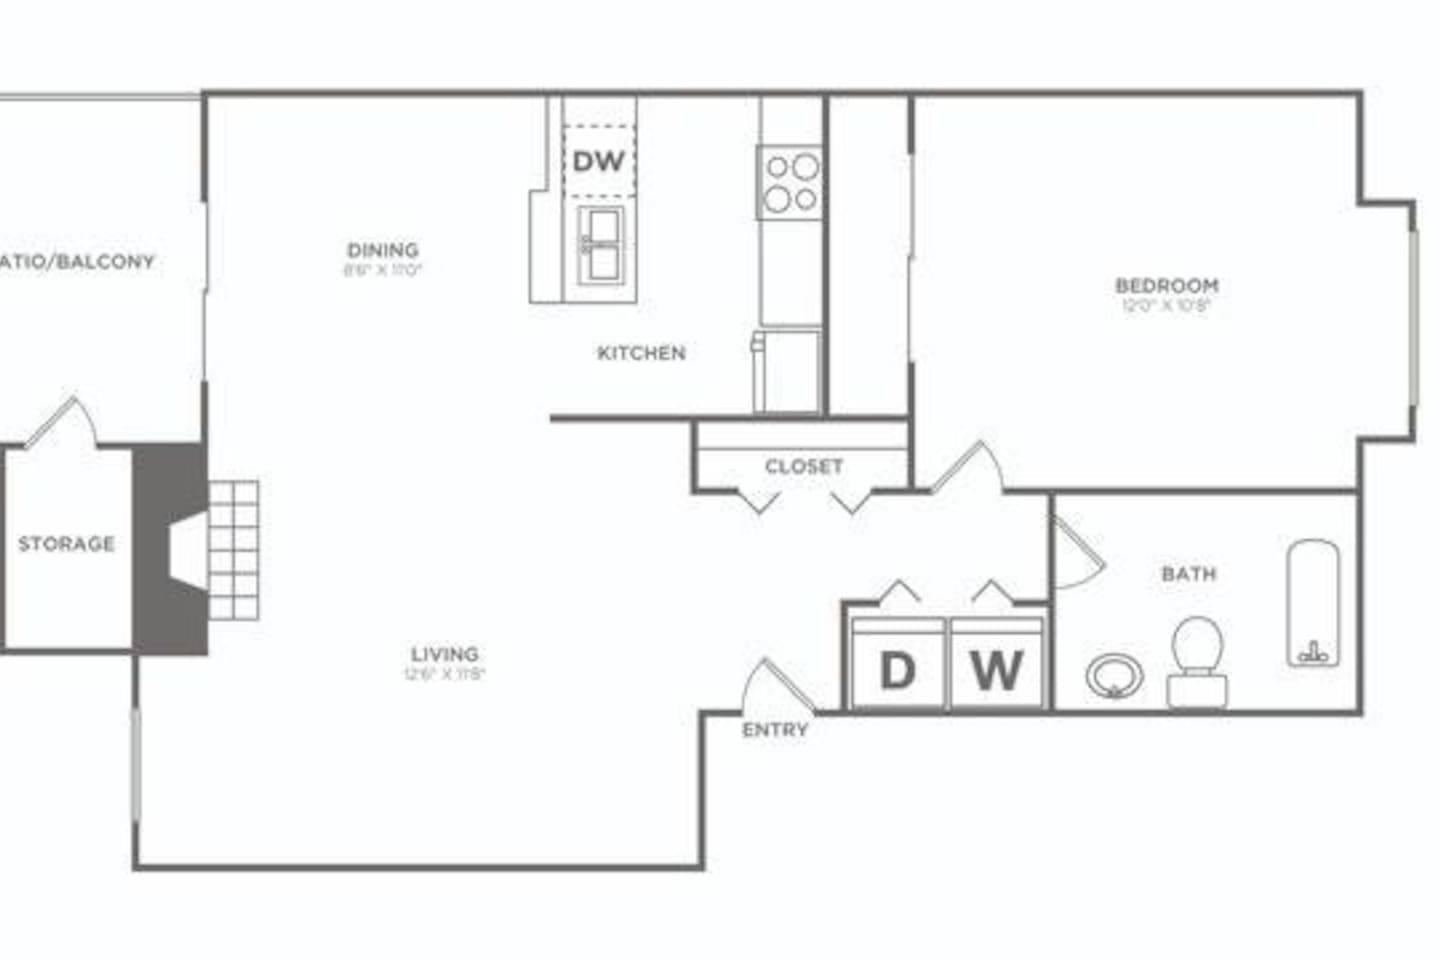 Floorplan diagram for One Bedroom (660 SF) Renovated, showing 1 bedroom